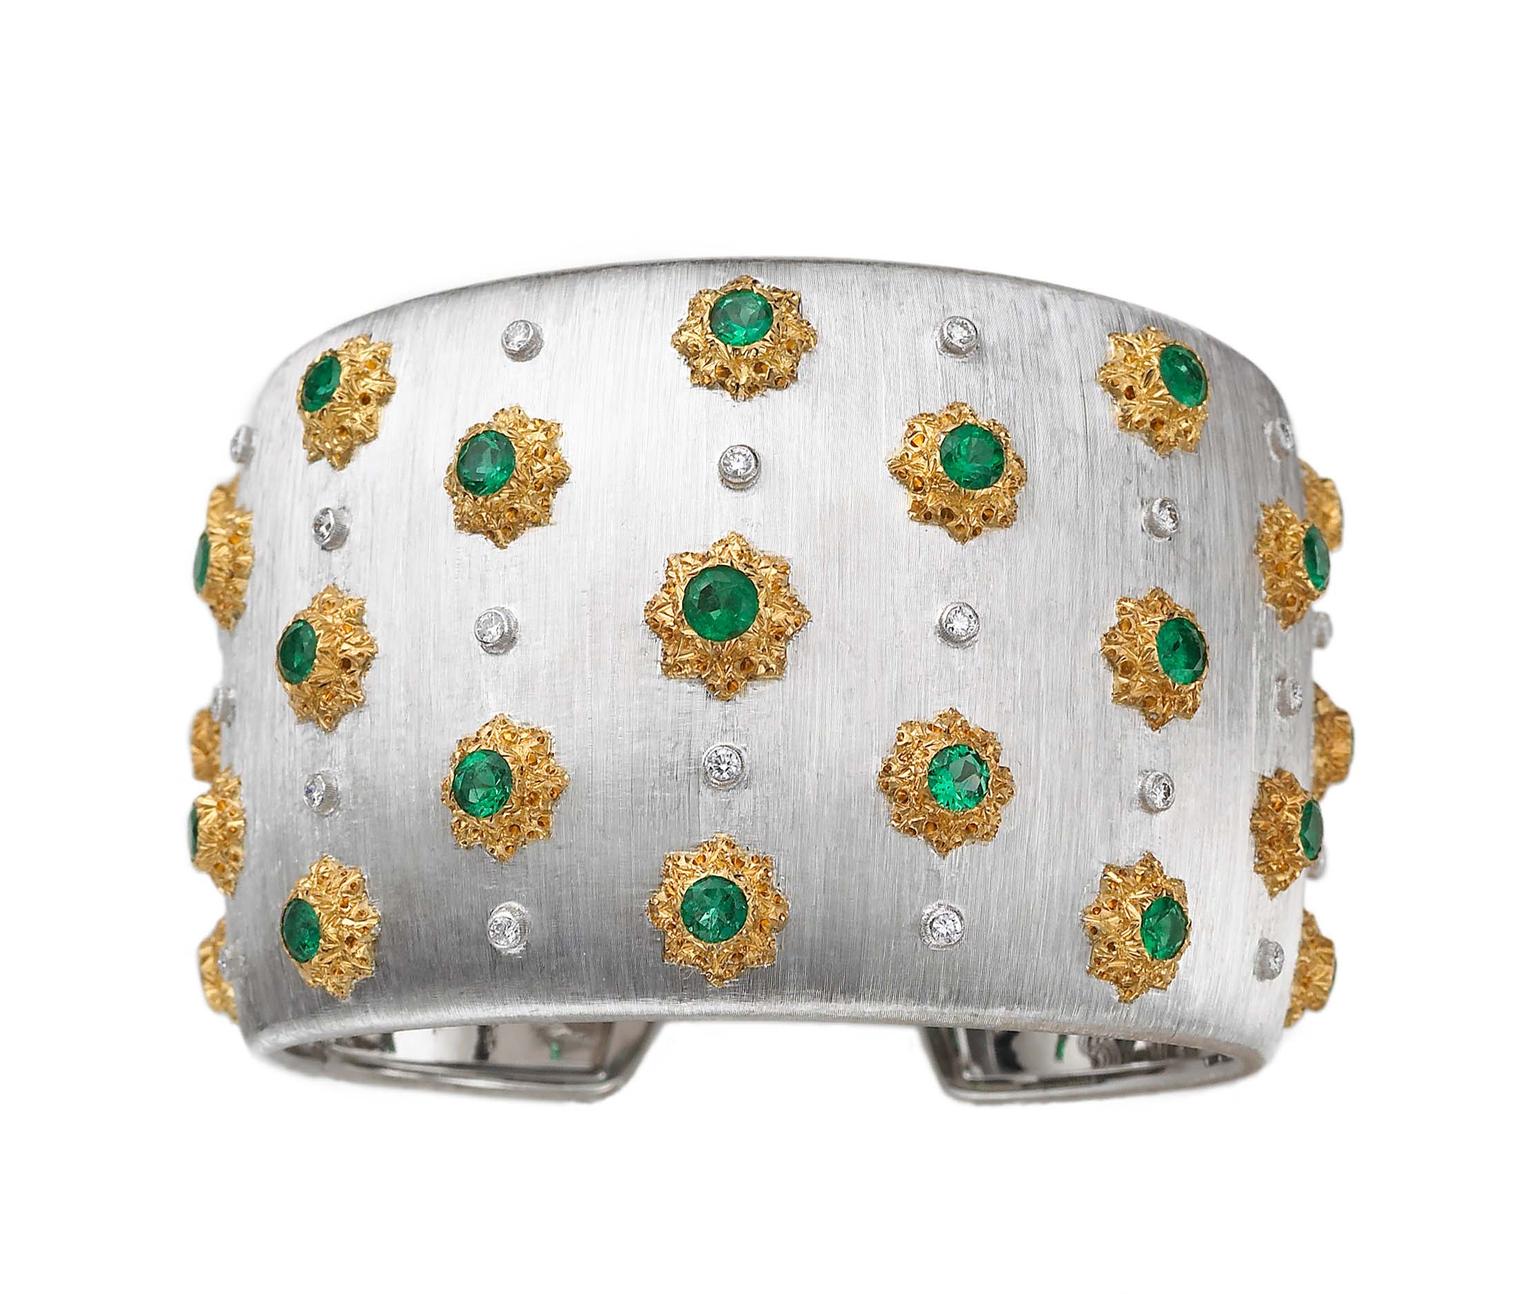 Buccellati cuff bracelet with emerald and diamonds, engraved using the "regato" technique, a Buccellati speciality.